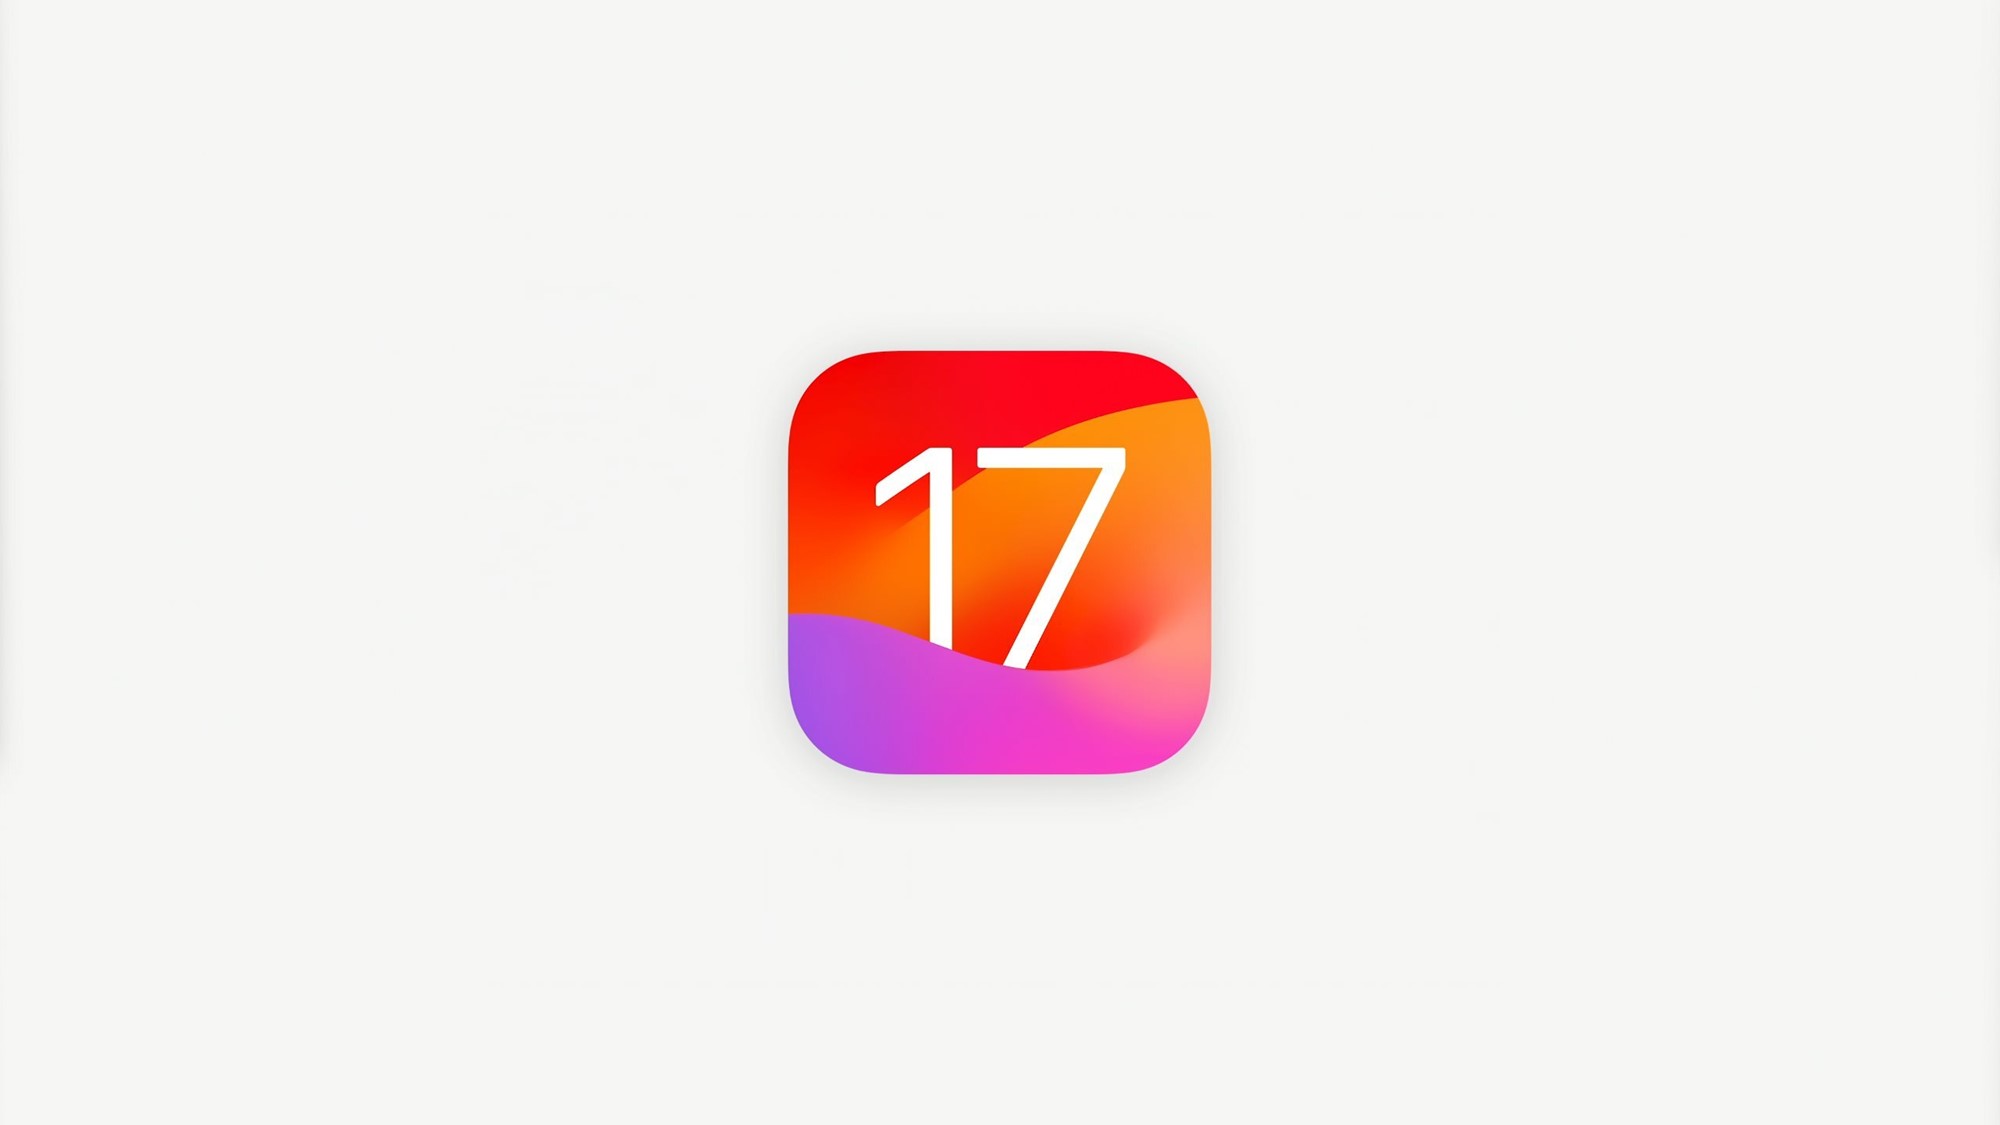 أبل تكشف عن iOS 17 رسميًا